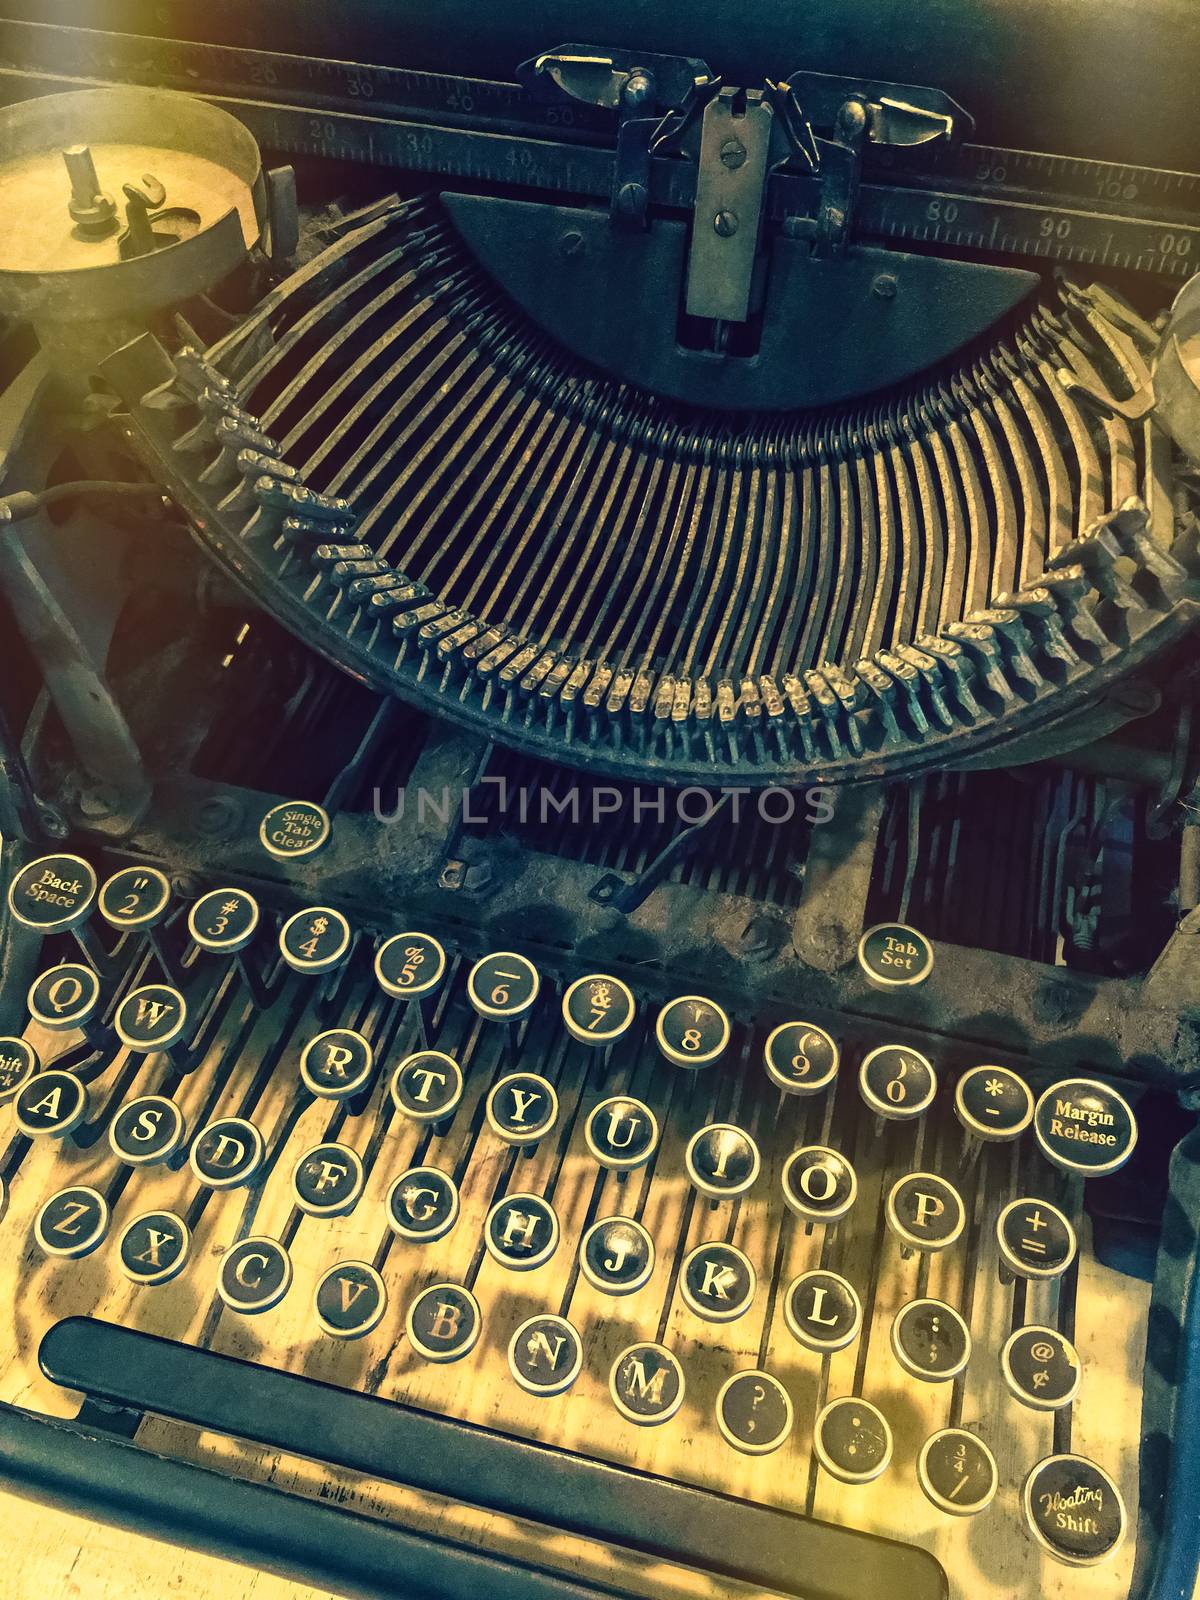 Keys of a vintage typewriter. Retro style photo with light leaks.